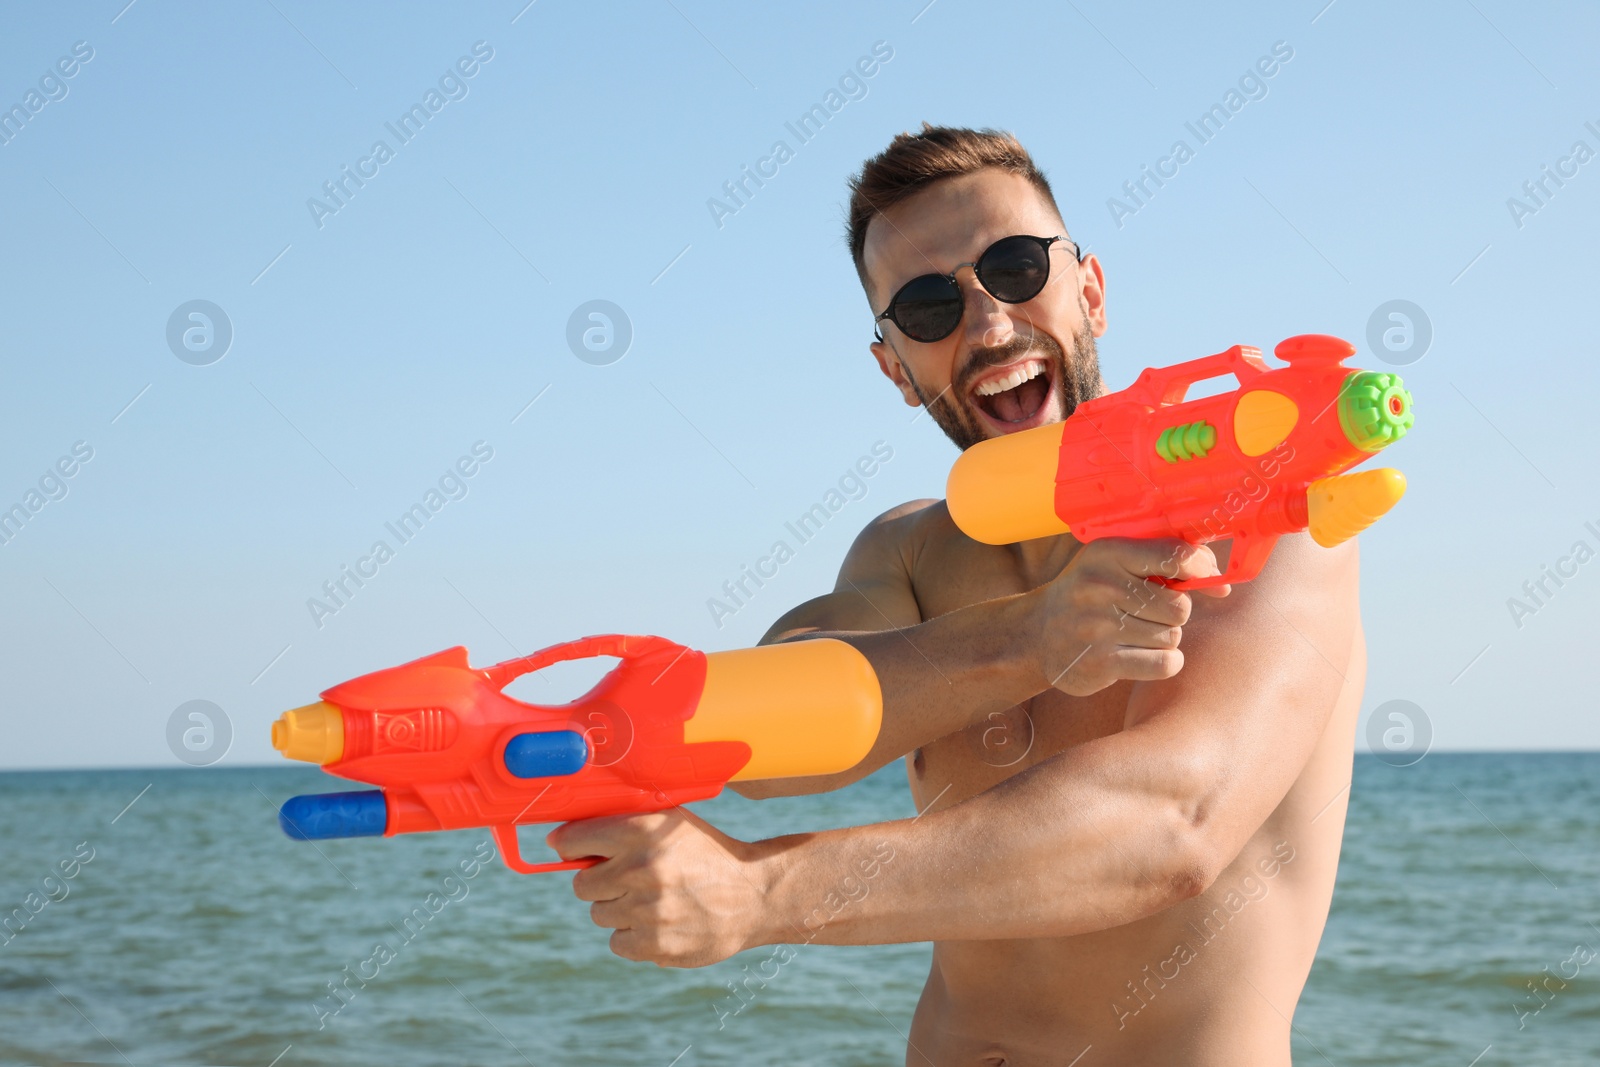 Photo of Man with water guns having fun on beach